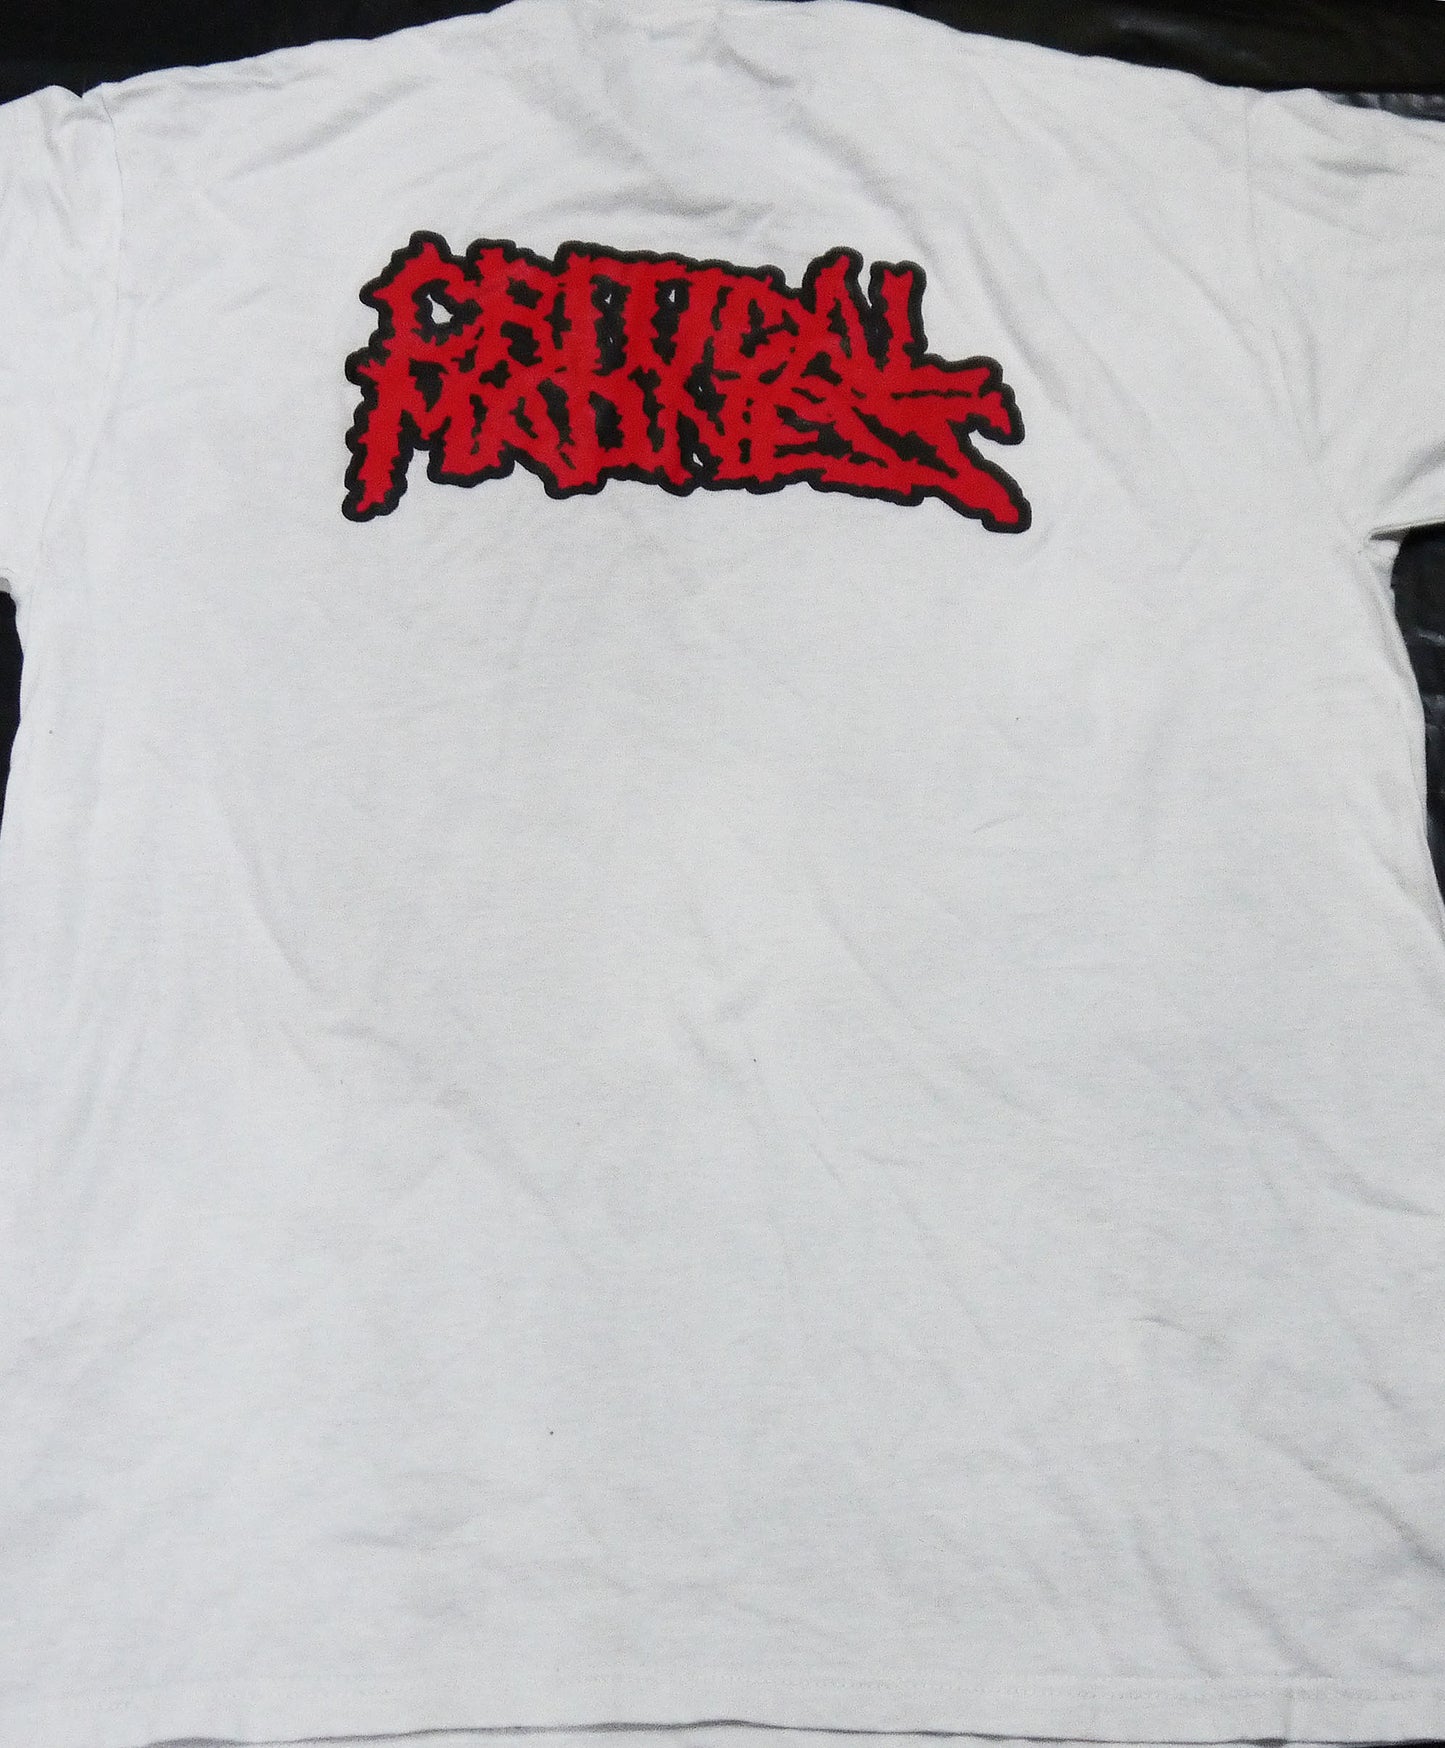 CRITICAL MADNESS - T-shirt